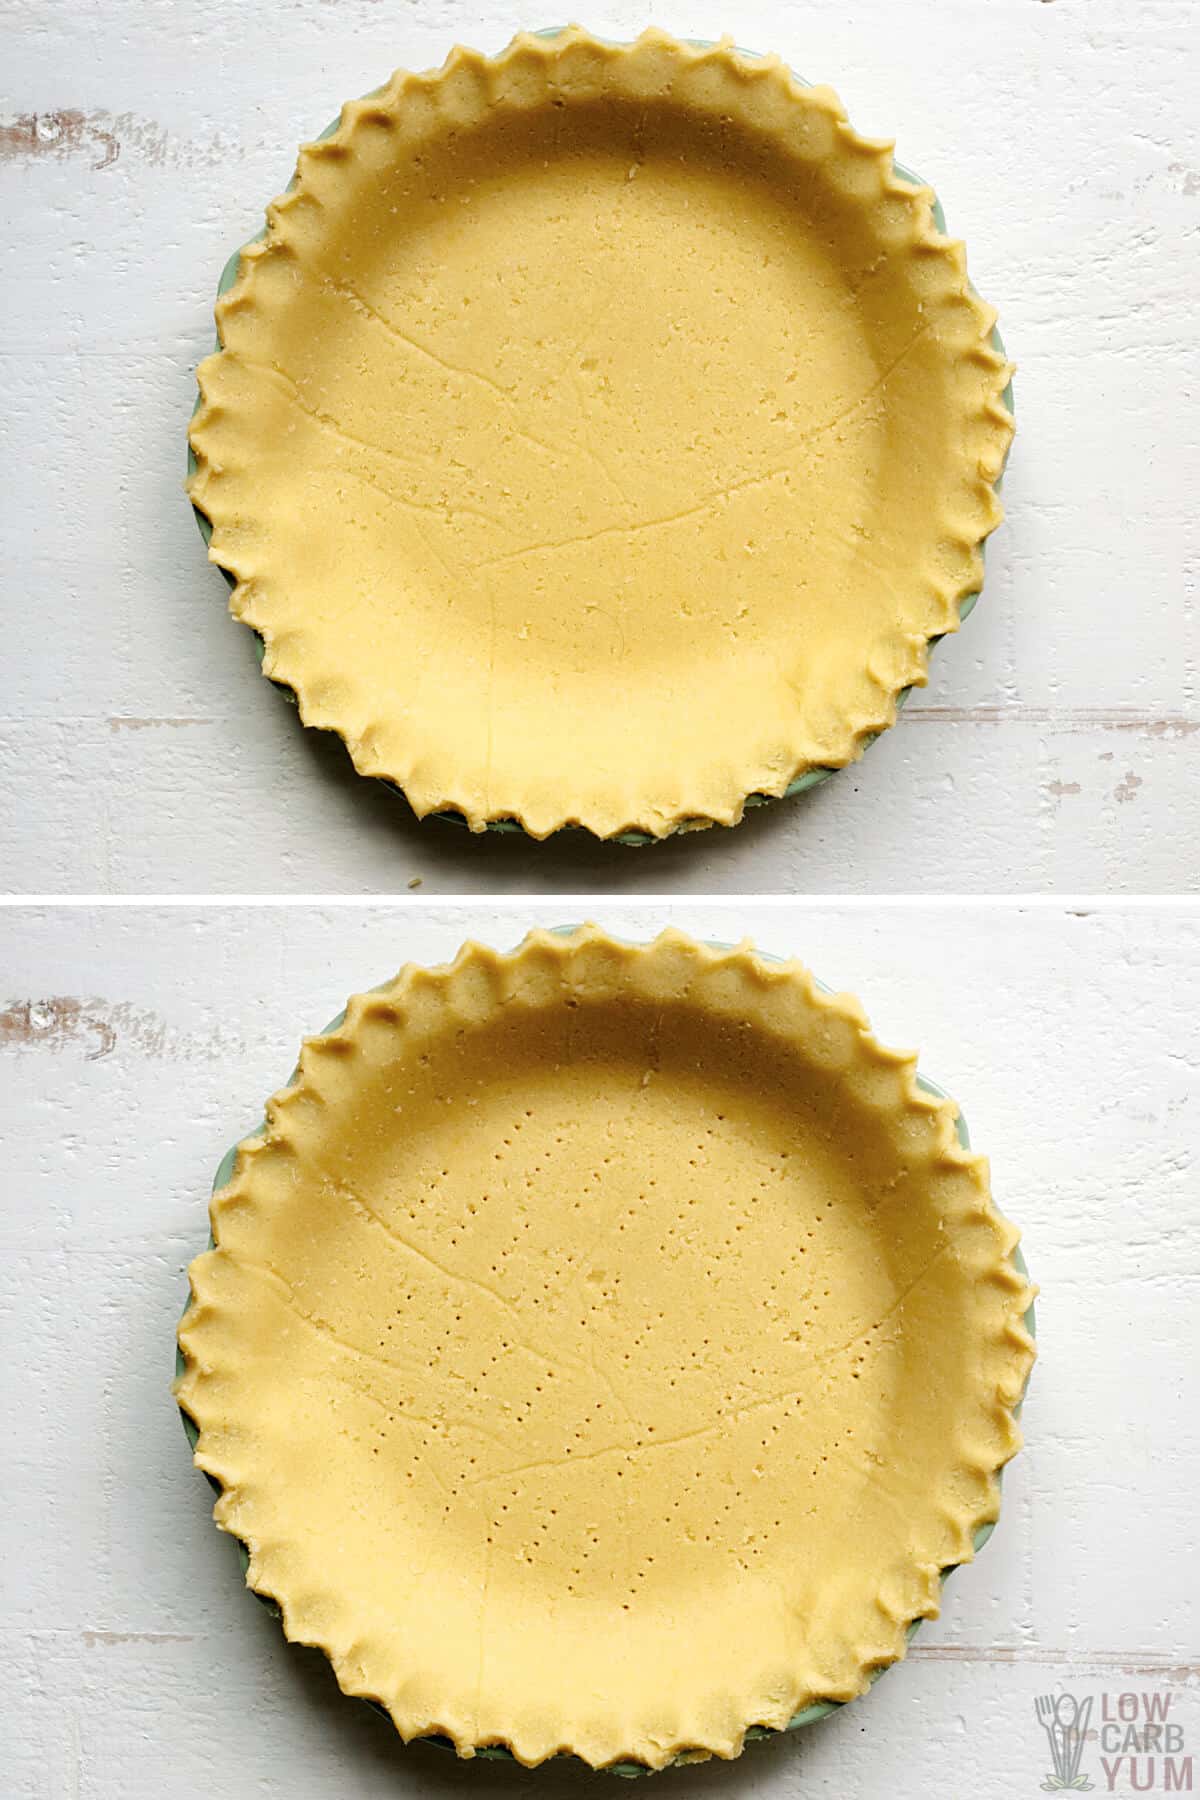 prepared crust in pie pan